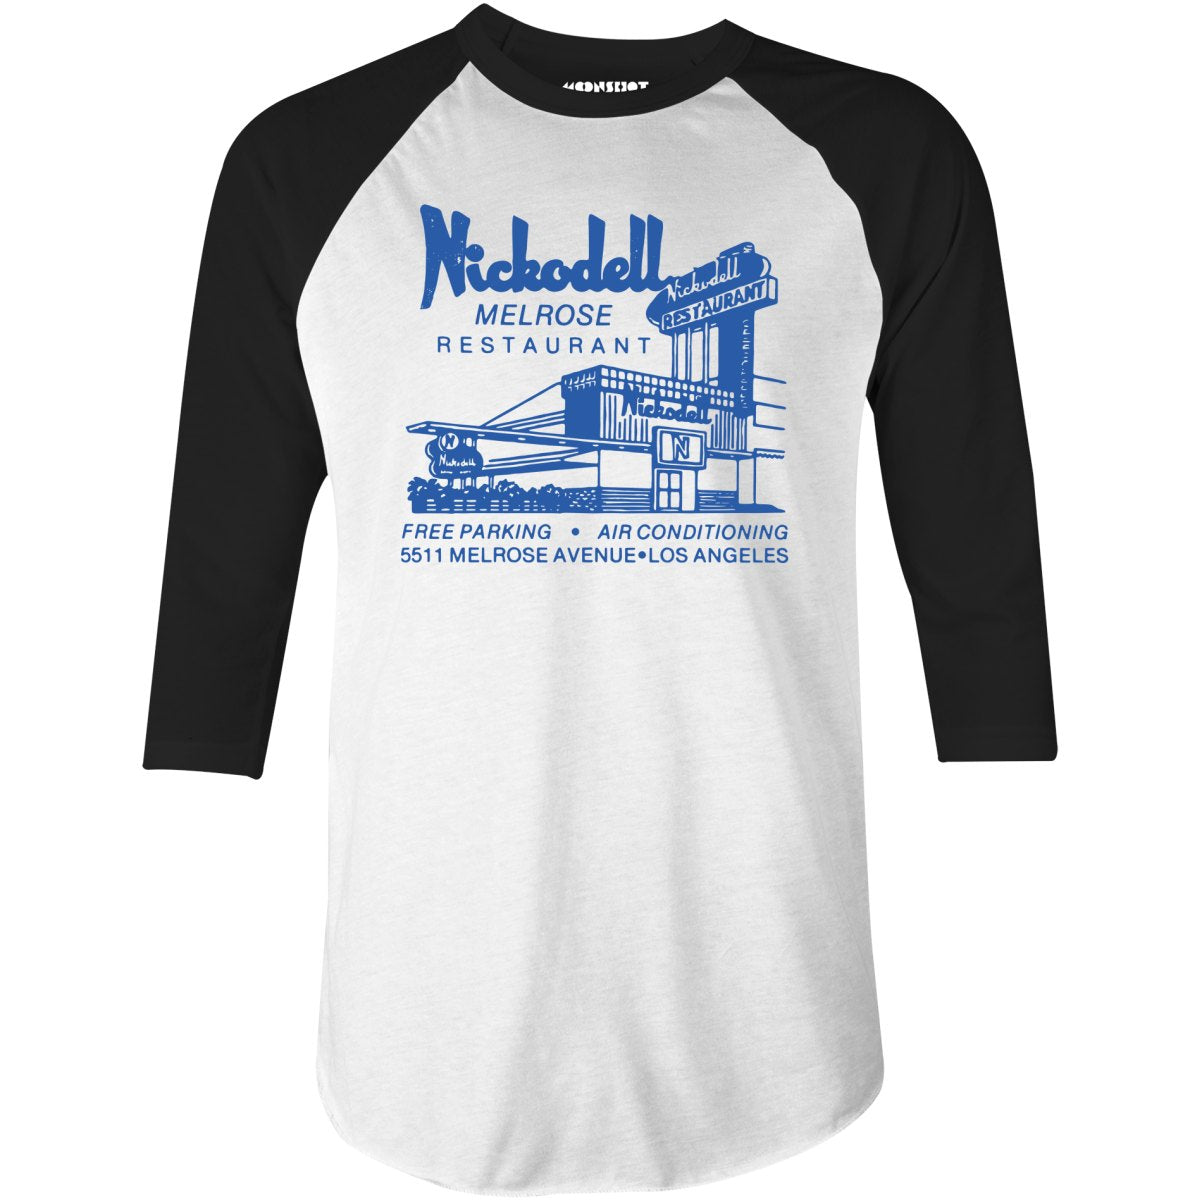 Nickodell - Los Angeles, CA - Vintage Restaurant - 3/4 Sleeve Raglan T-Shirt